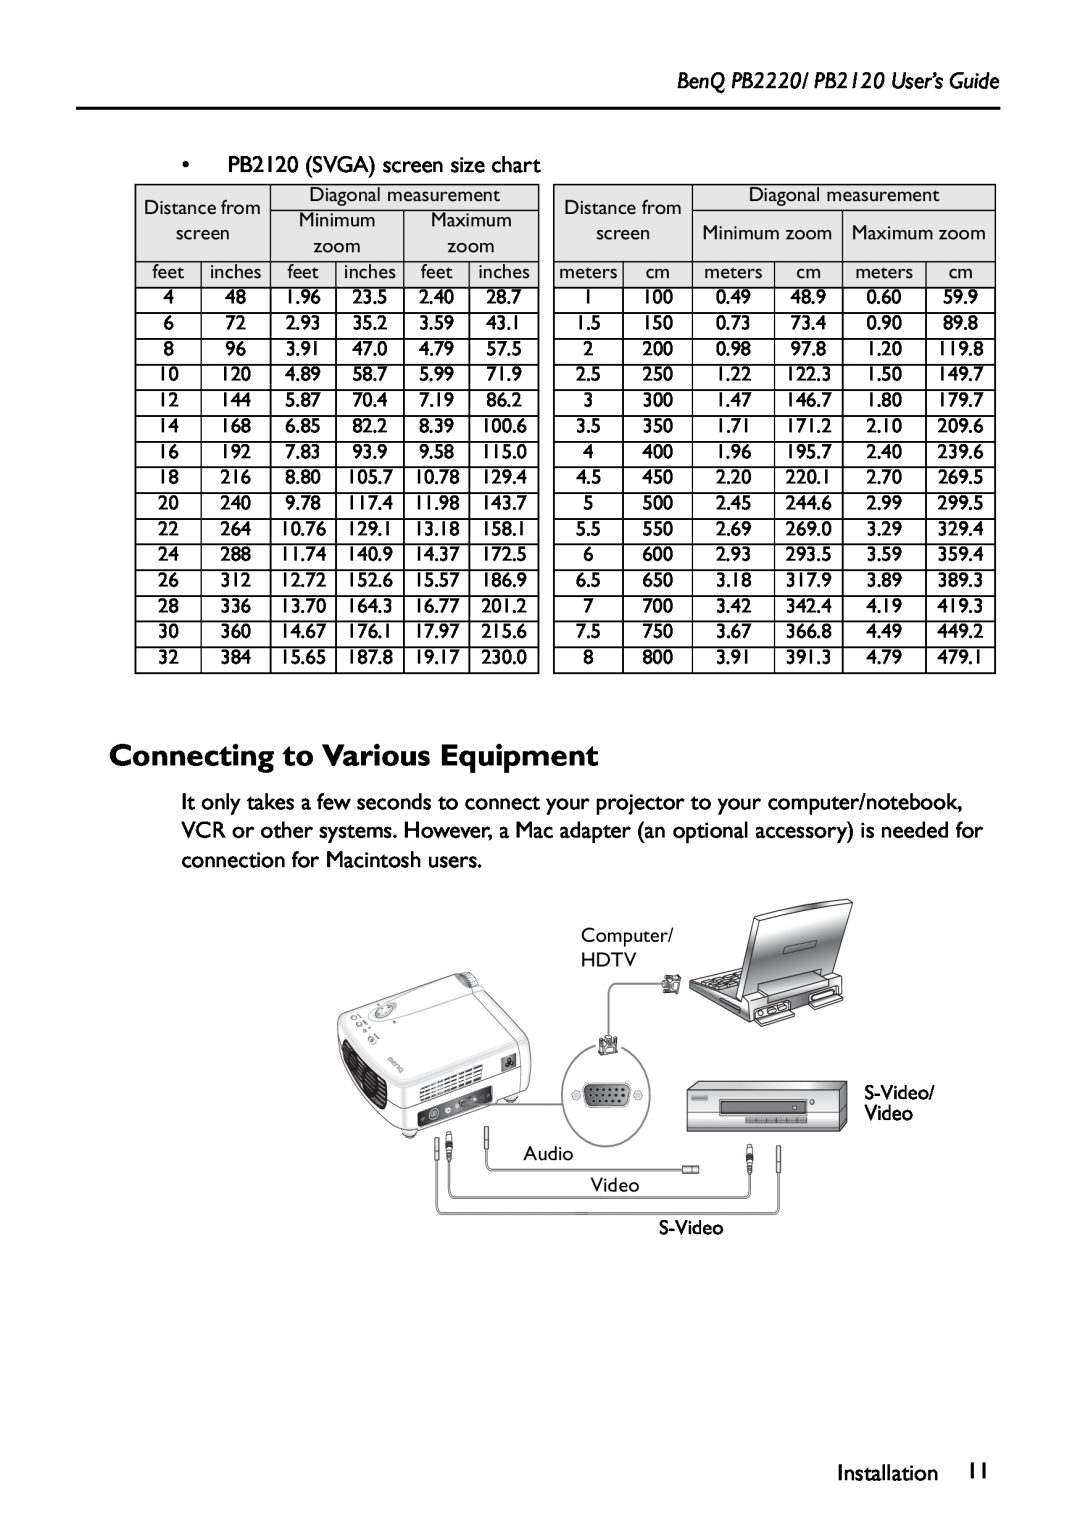 BenQ manual Connecting to Various Equipment, BenQ PB2220/ PB2120 User’s Guide, Installation 